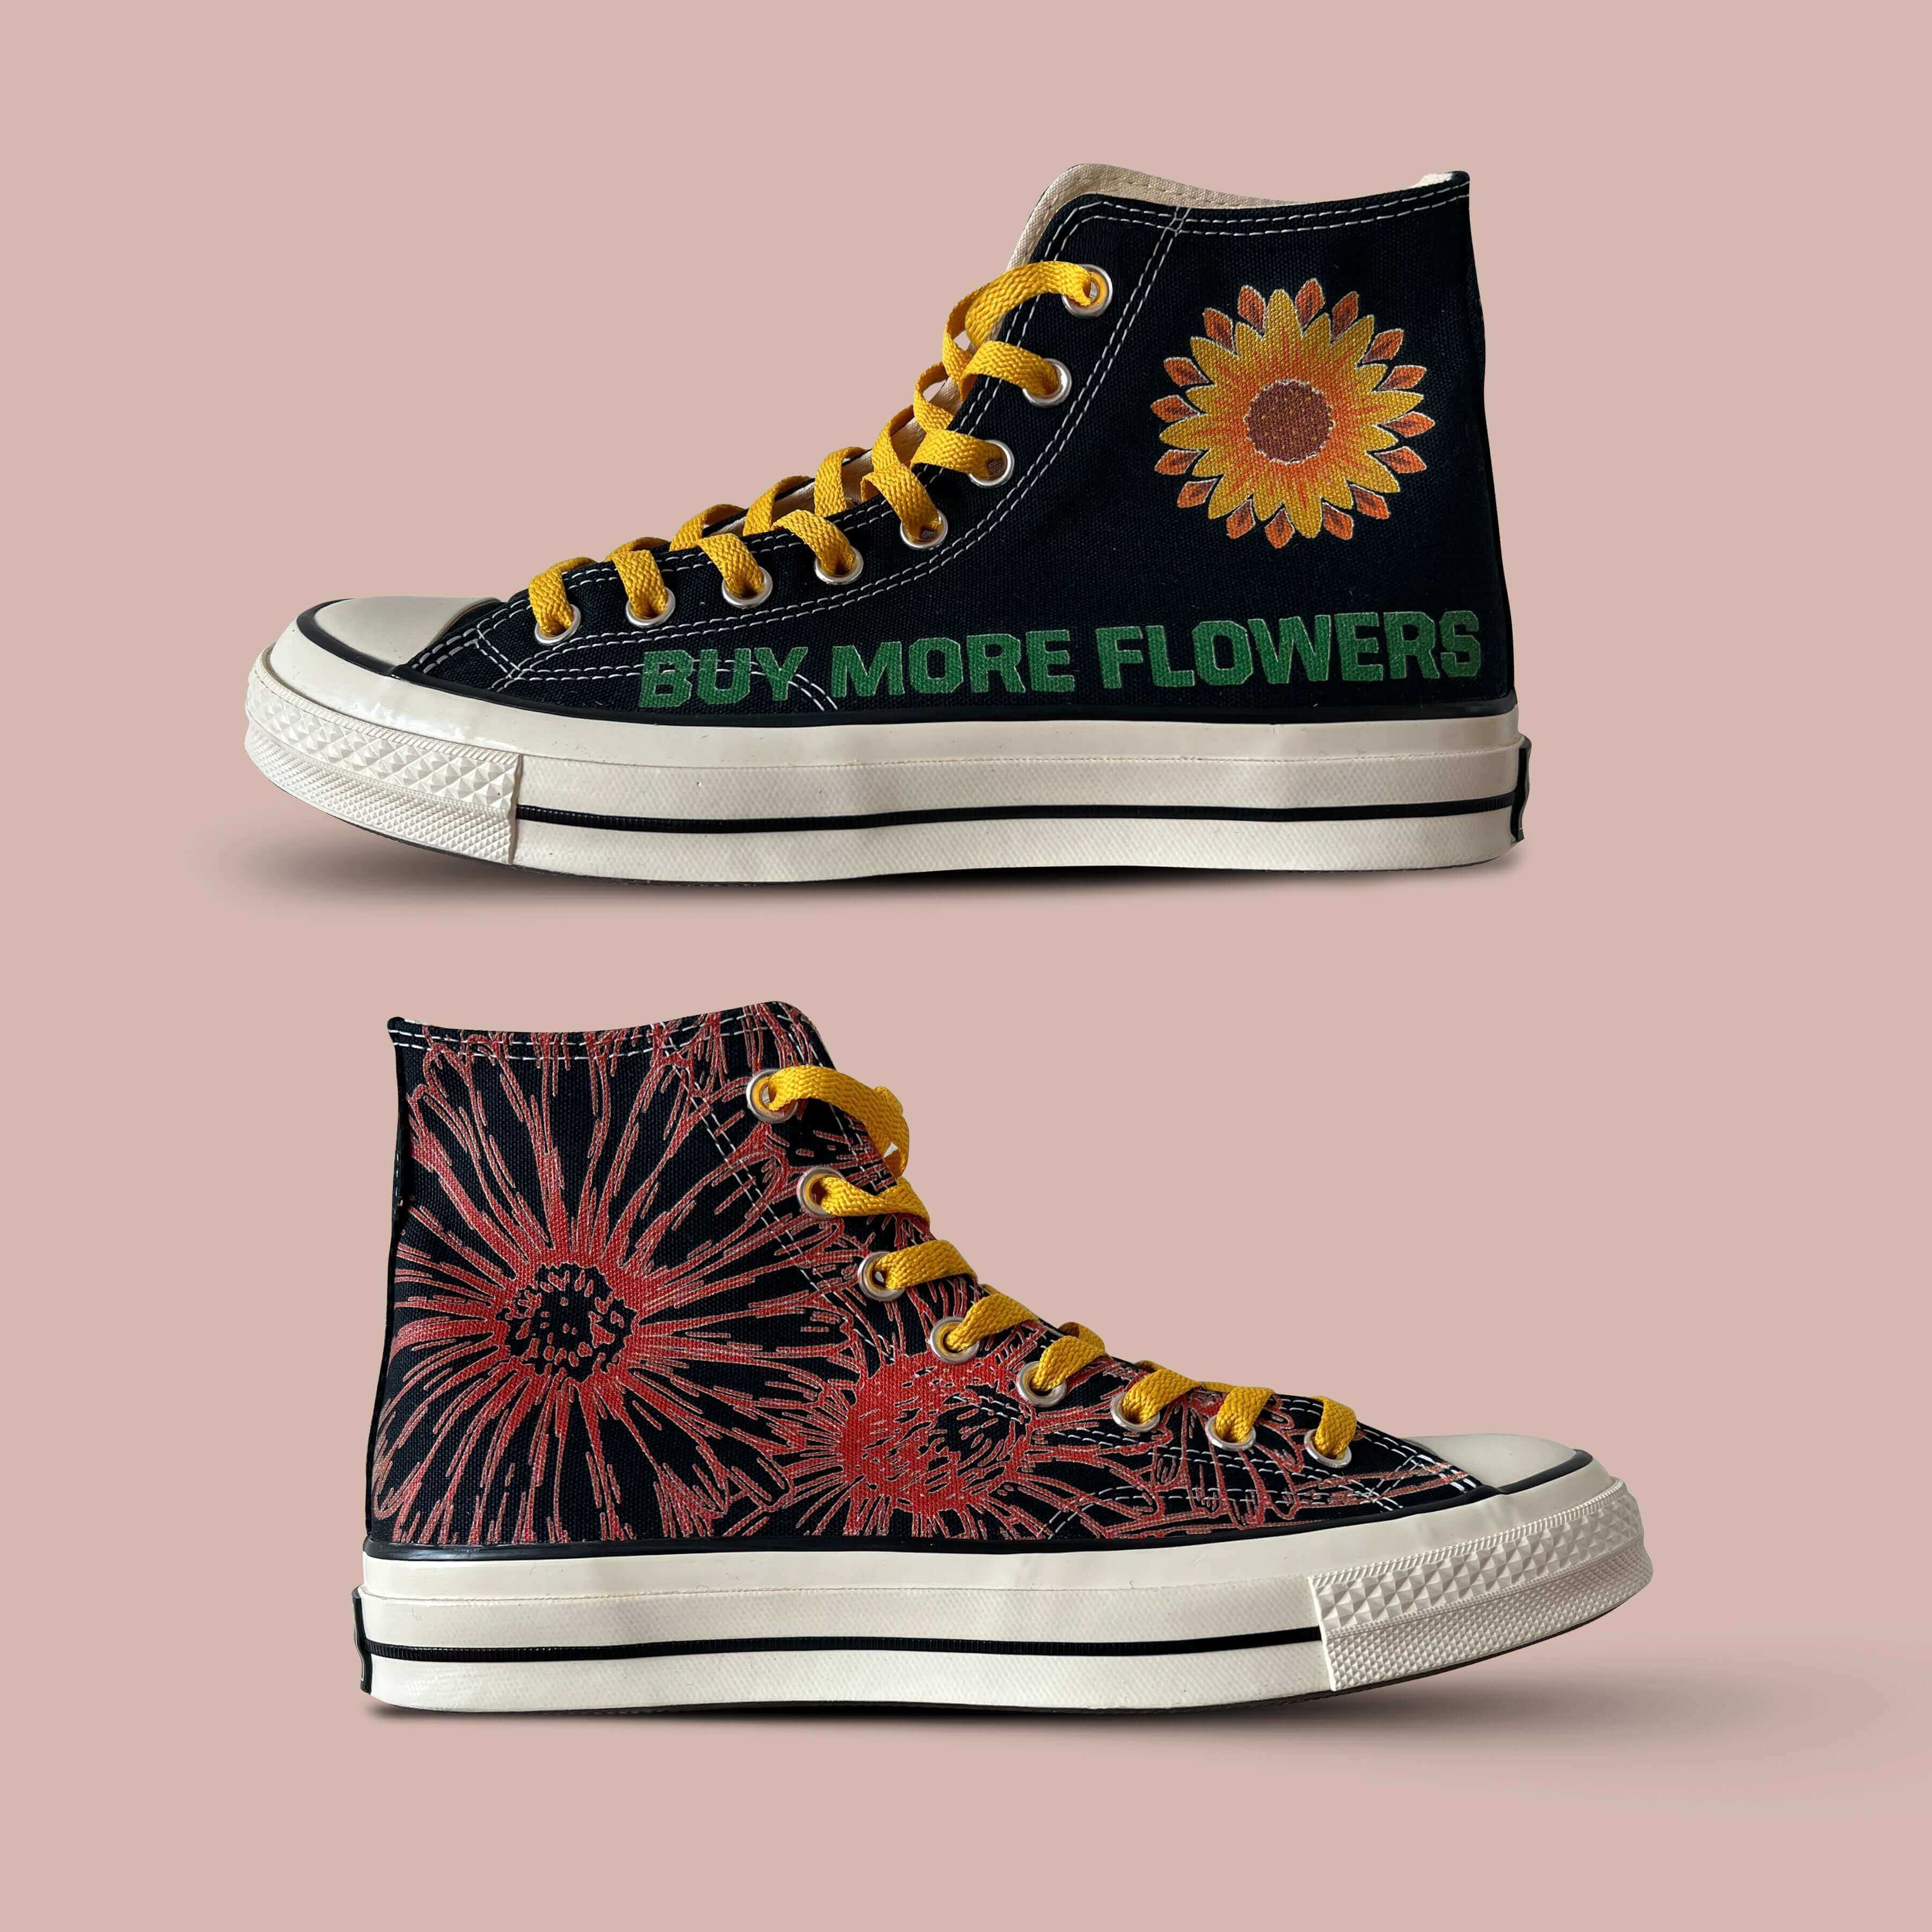 Buy More Flowers! Converse Chuck 70s Hi | Sneakers